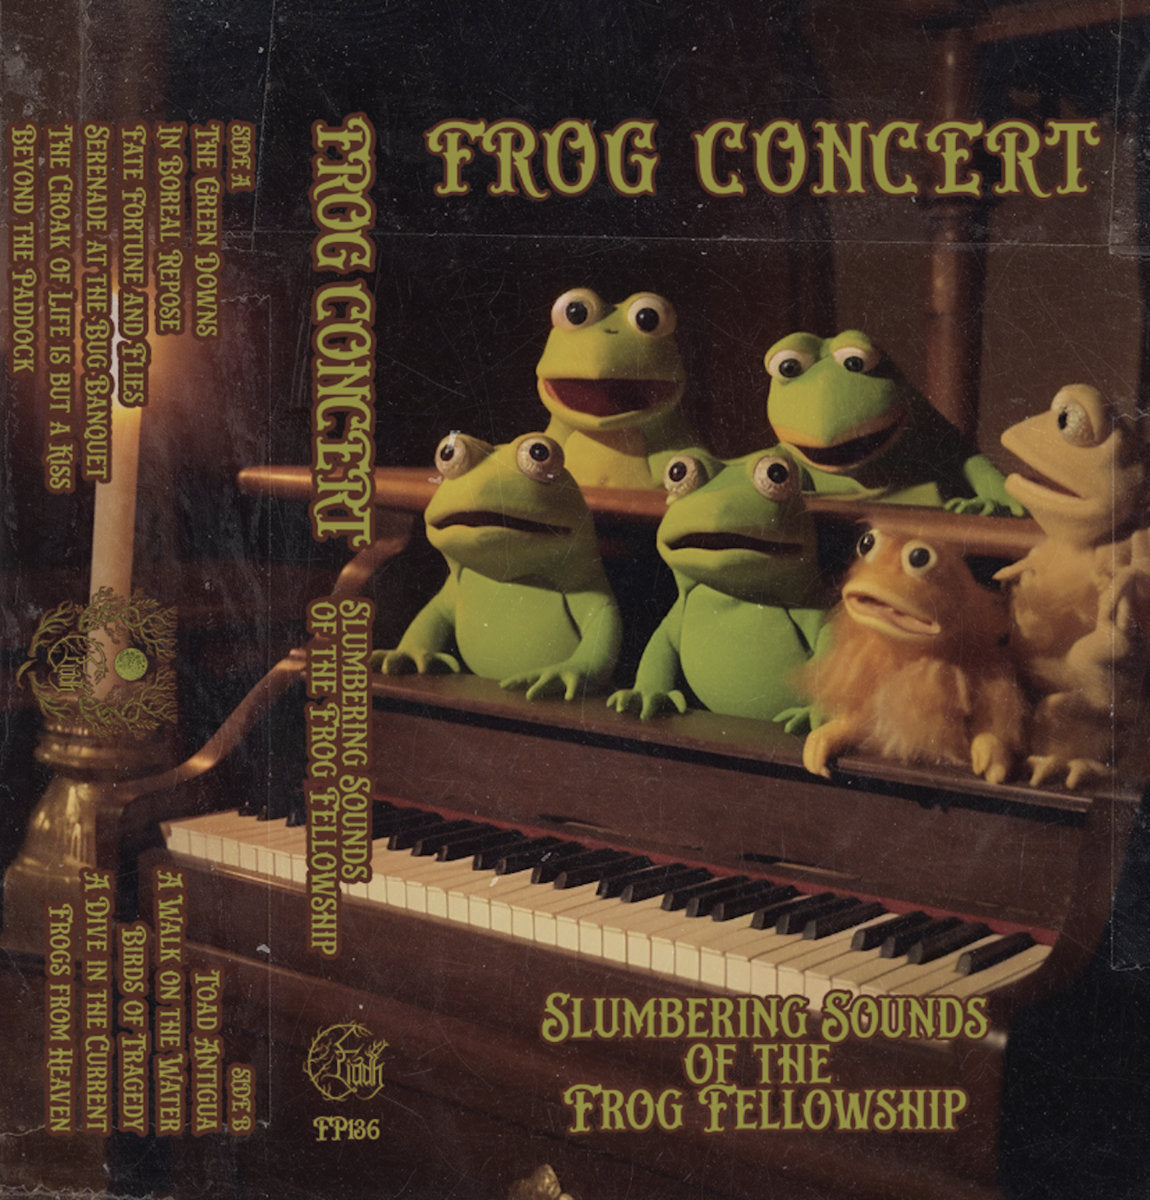 Frog Concert - Slumbering Sound of the Frog Fellowship